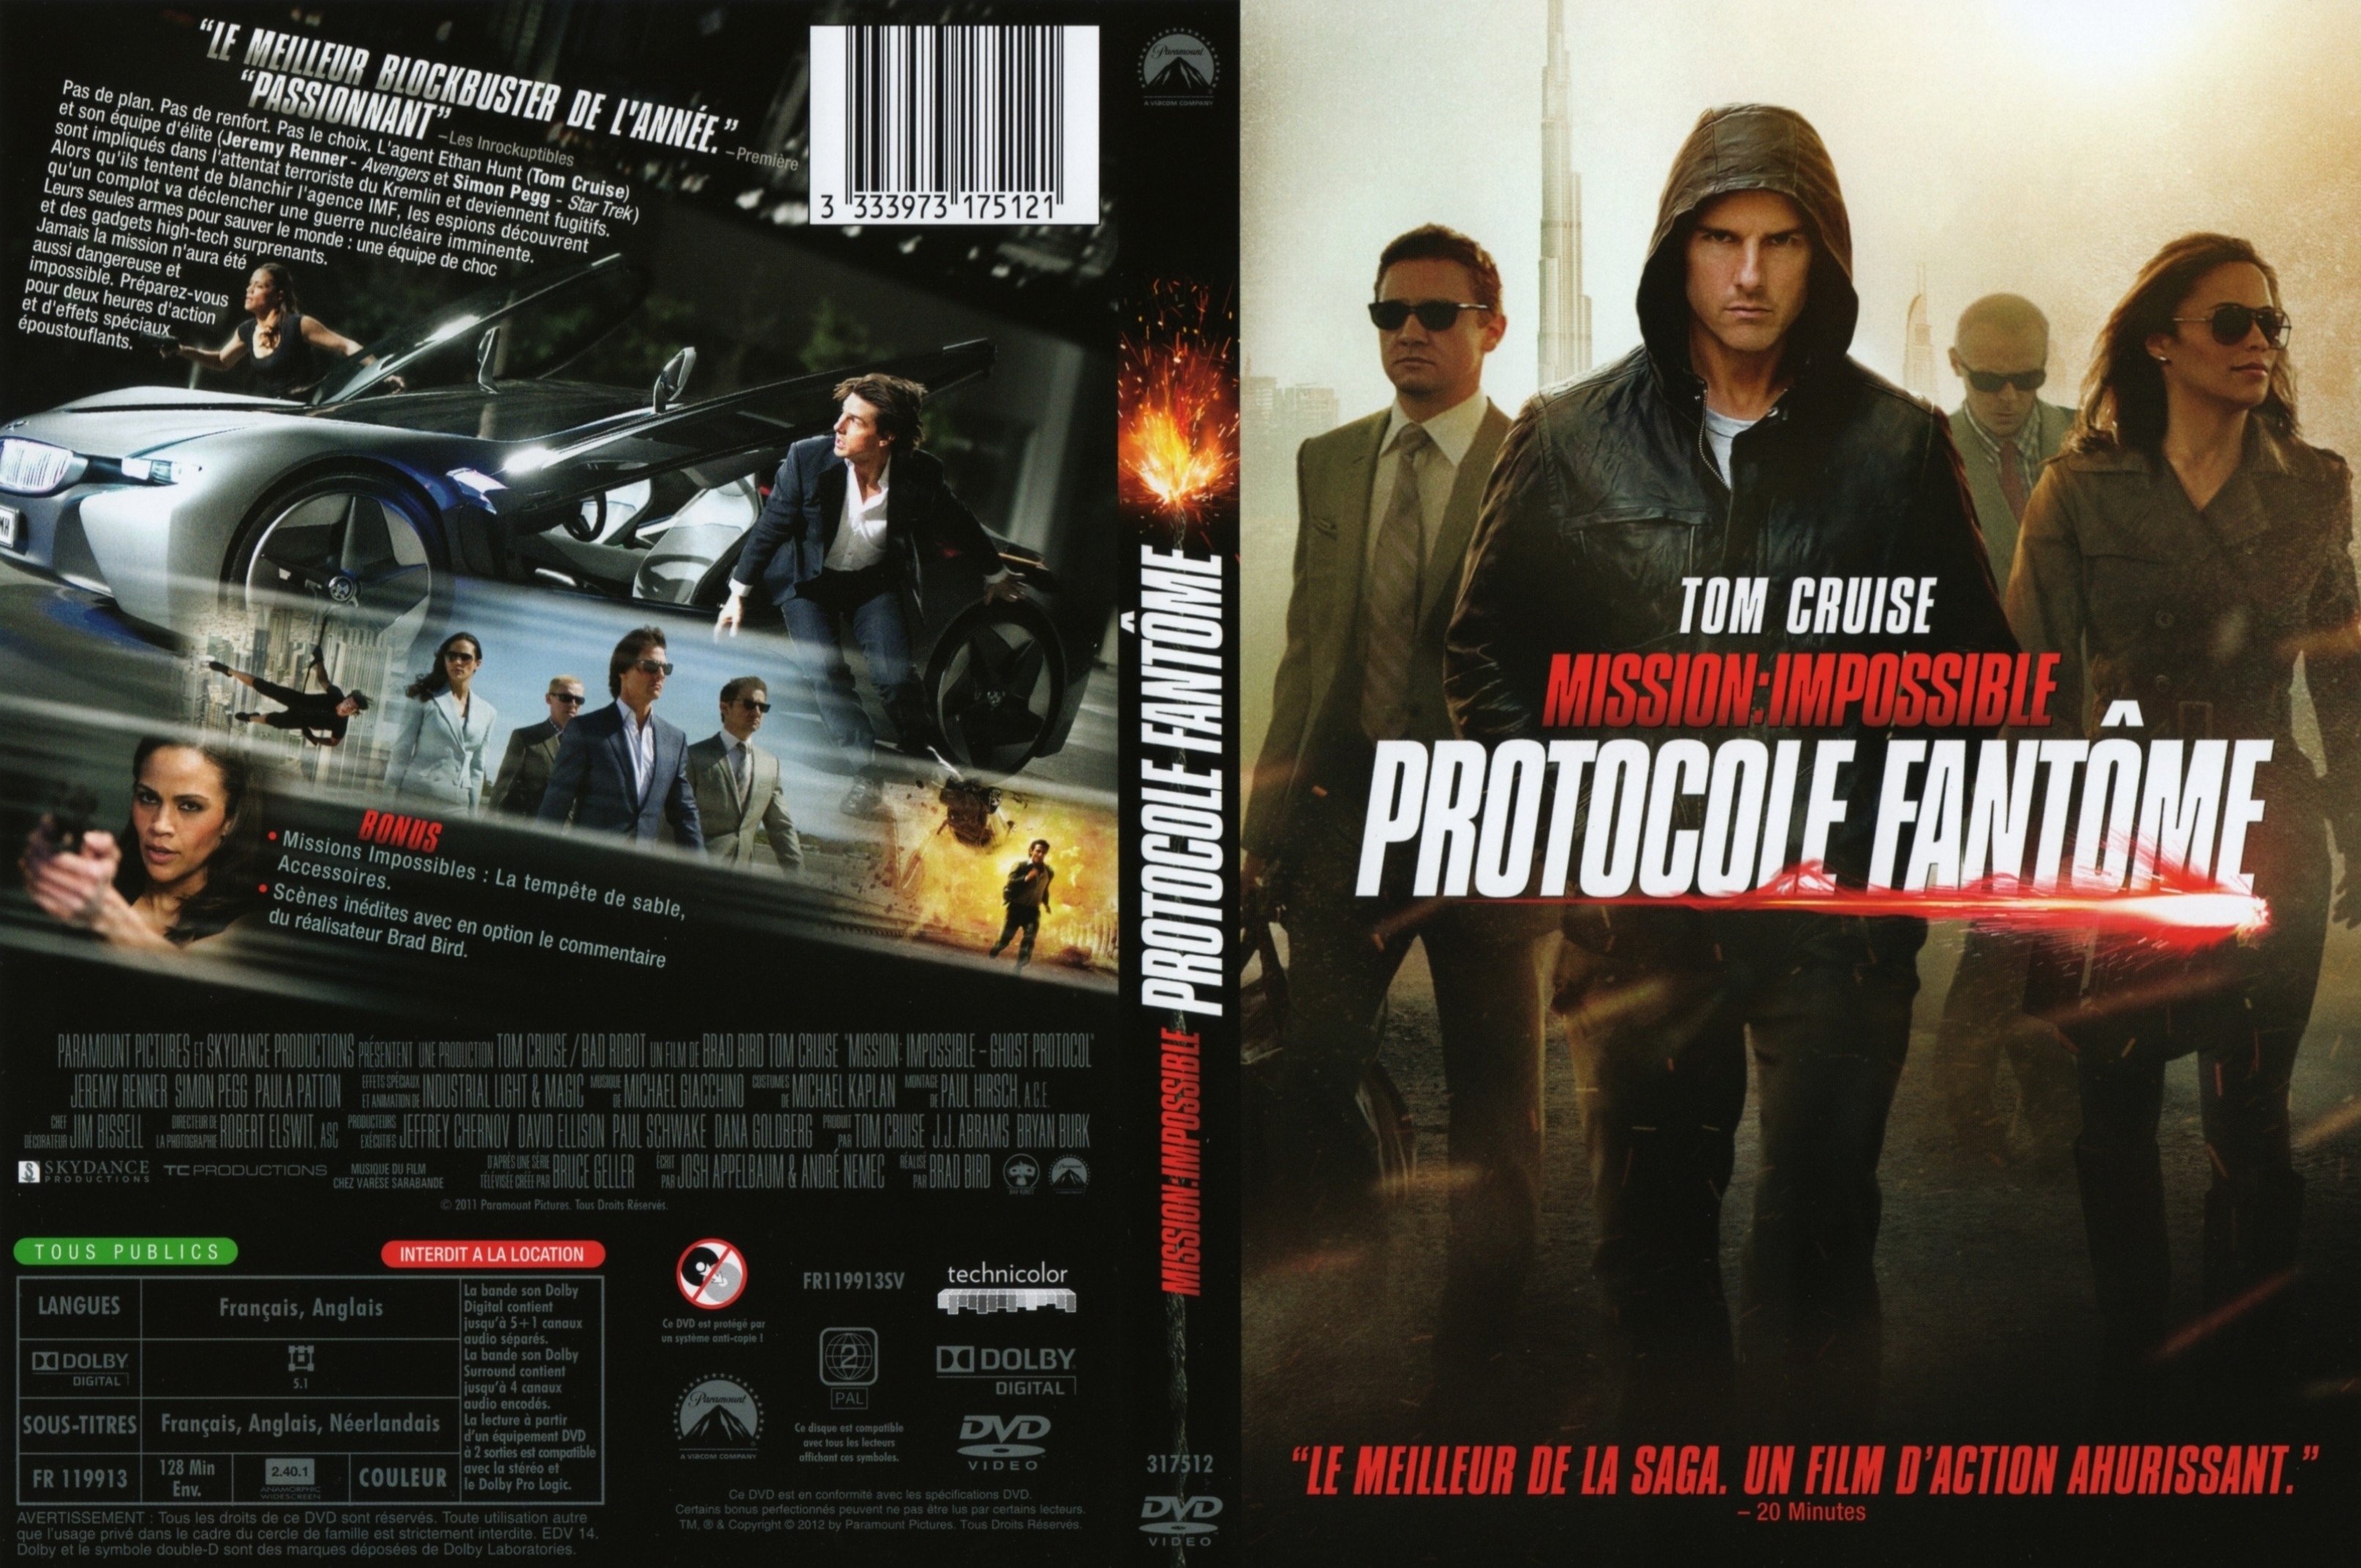 Jaquette DVD Mission Impossible Protocole fantme